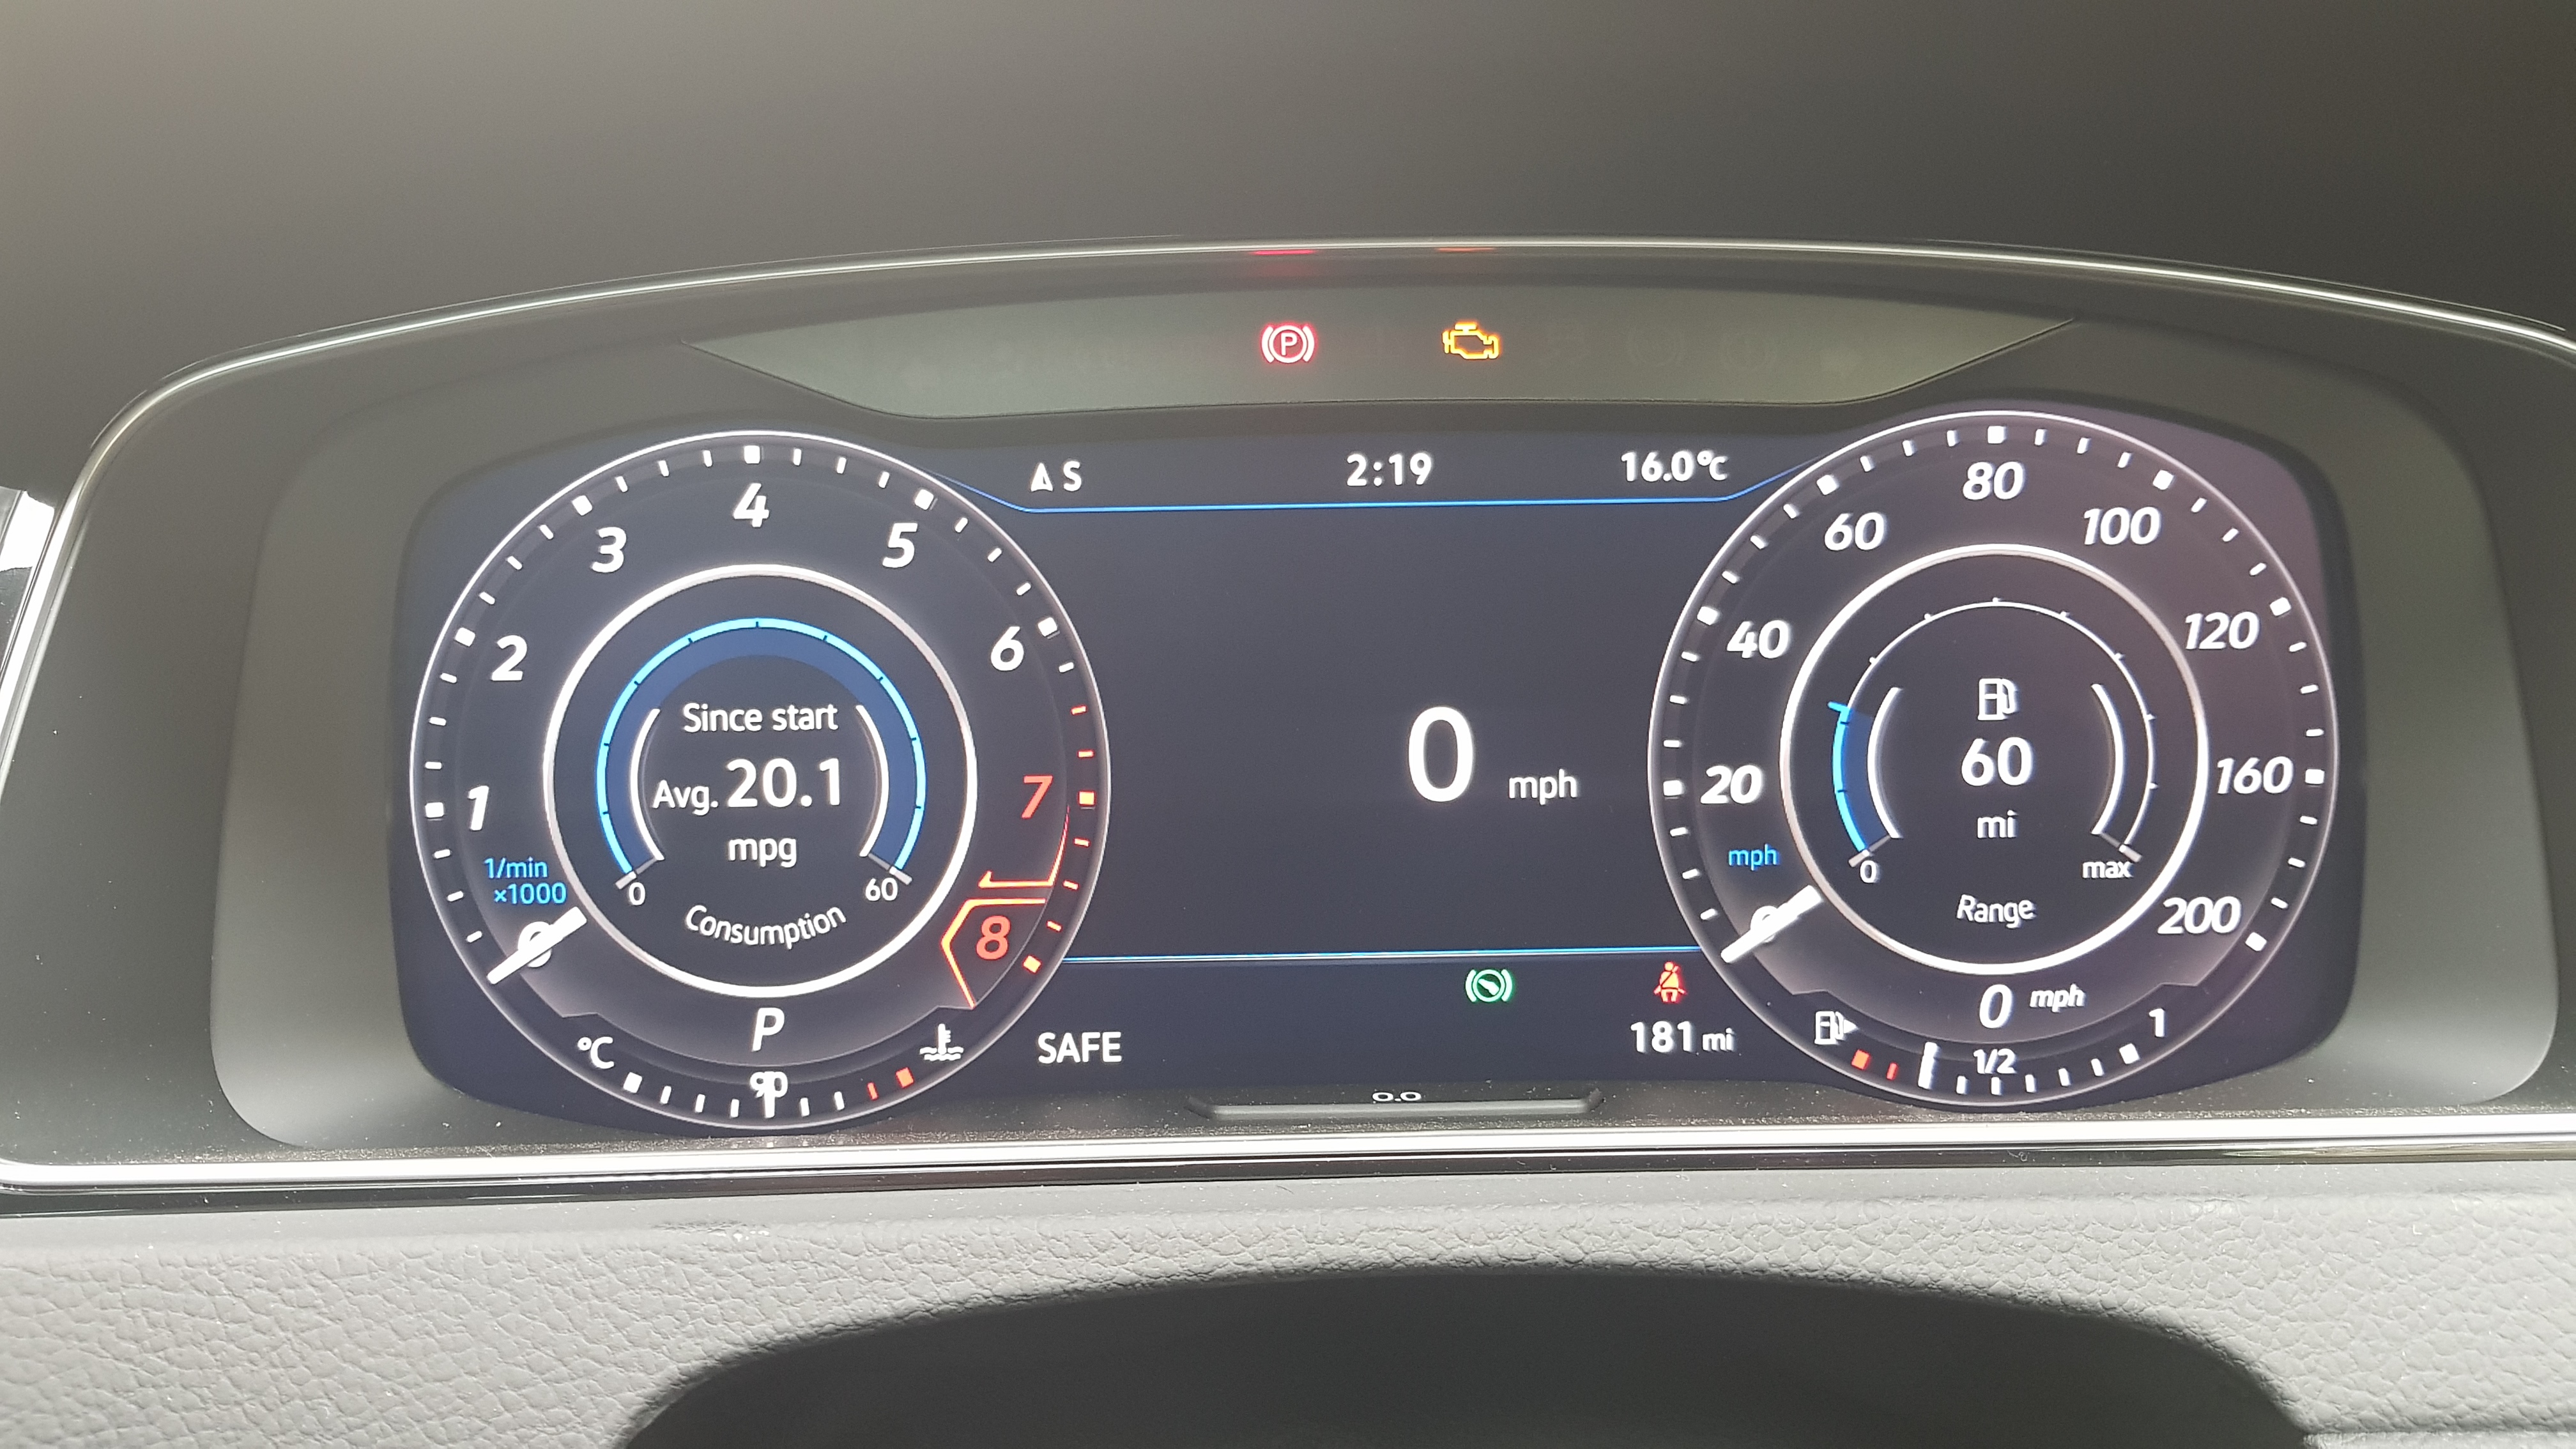 Volkswagen Golf VII GTI Performance Active Info Display used buy